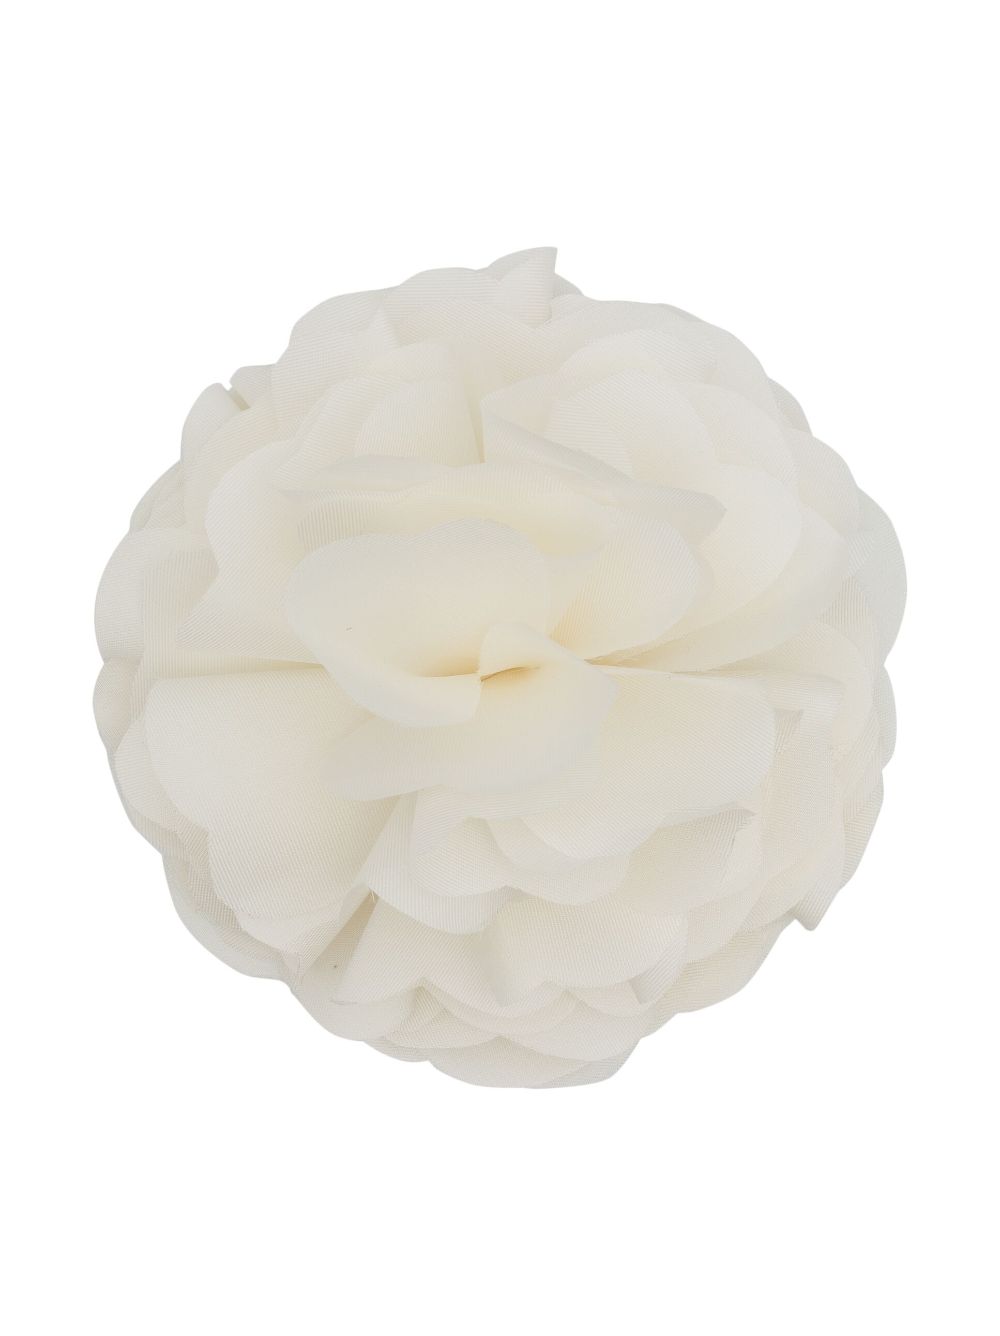 MANURI New Romance floral brooch - White